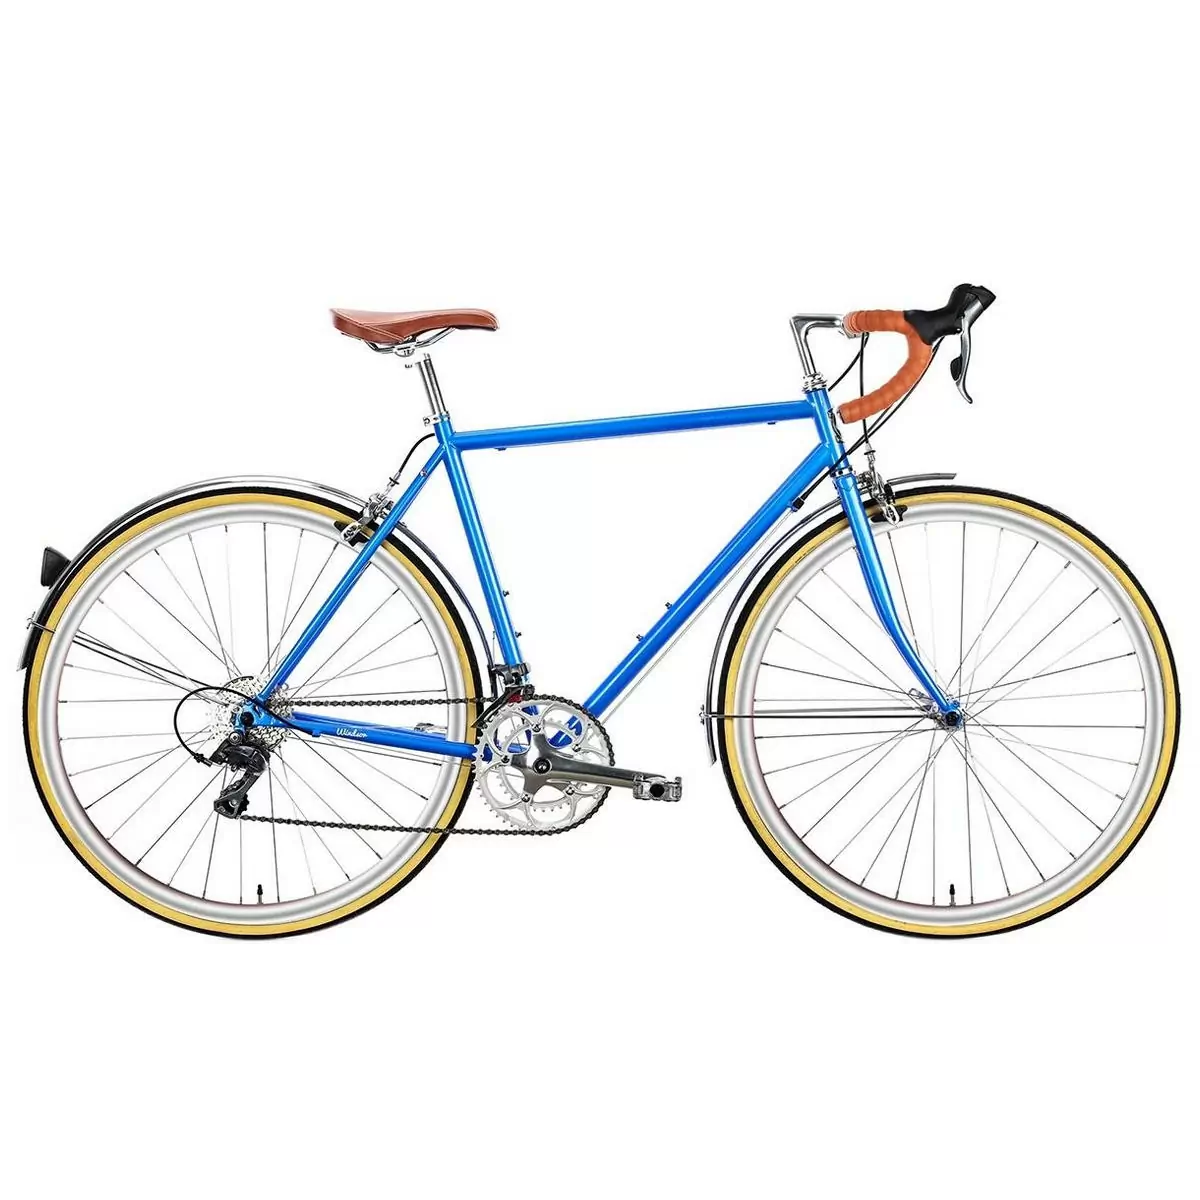 Vélo de ville TROY 16v bleu windsor moyen 54cm - image